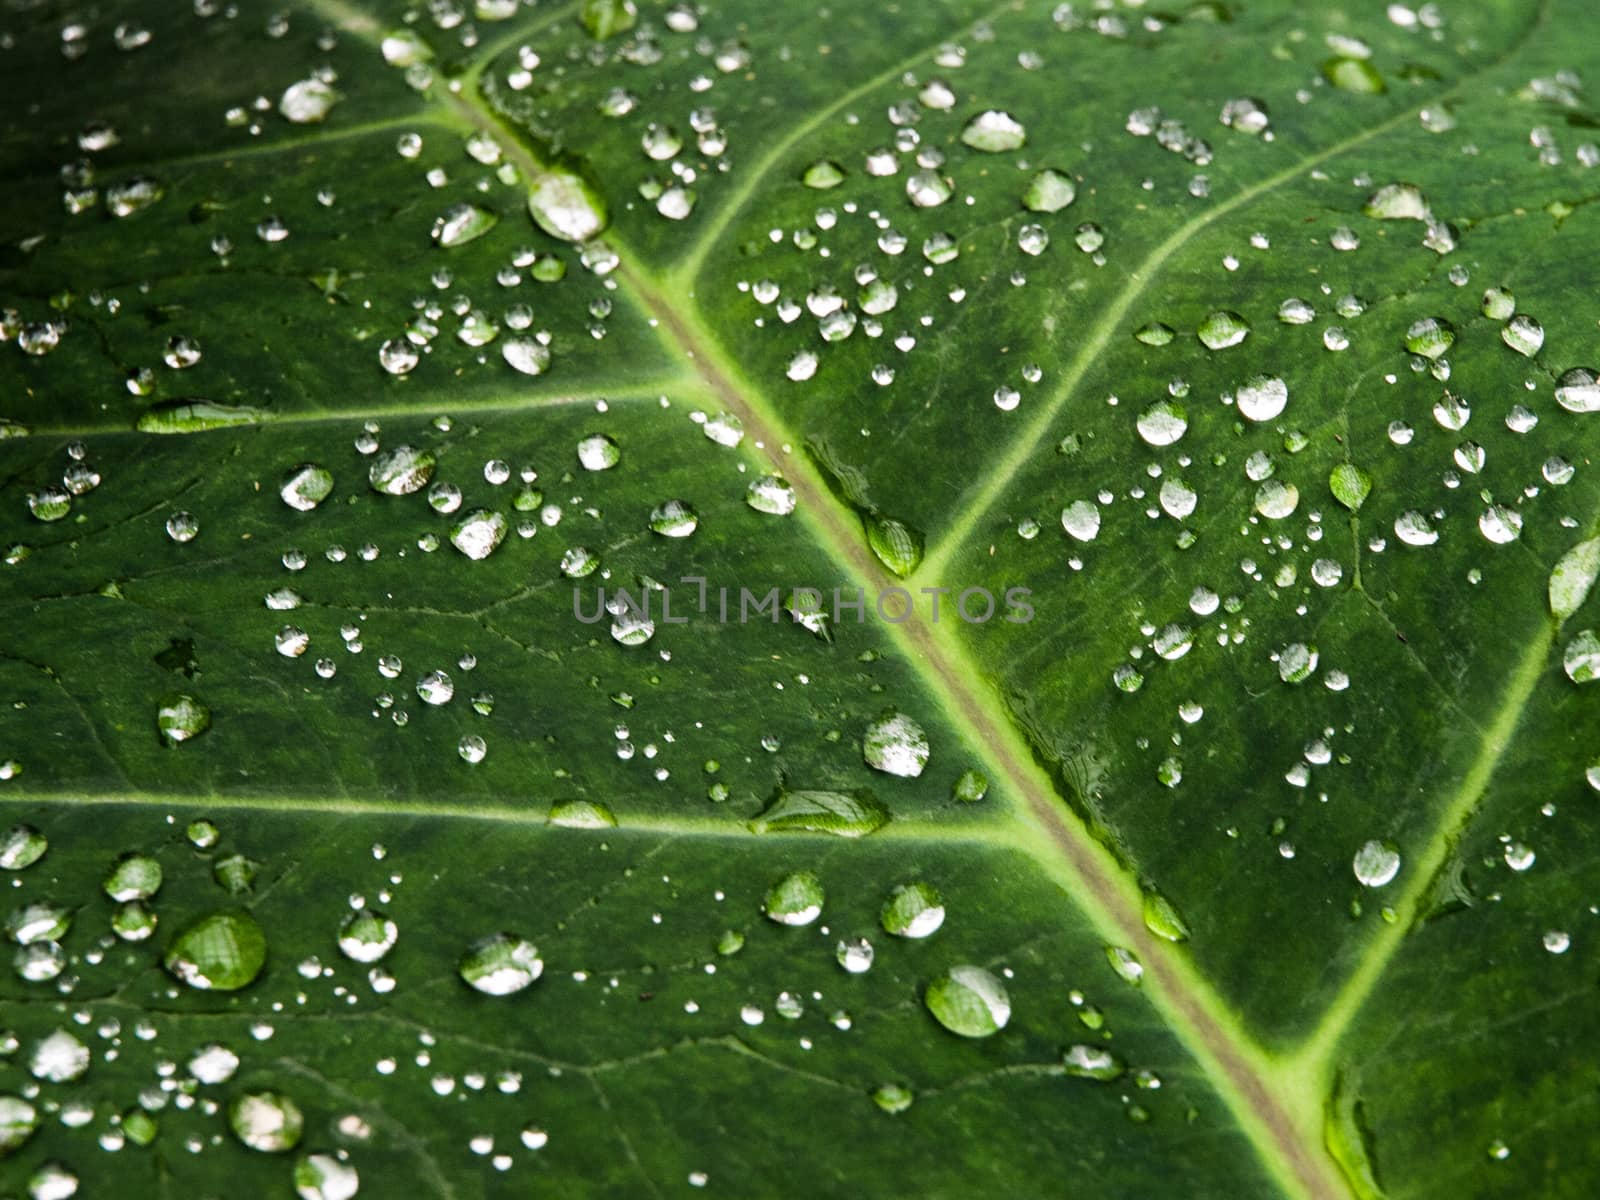 Rain drops on green leaf by pyty